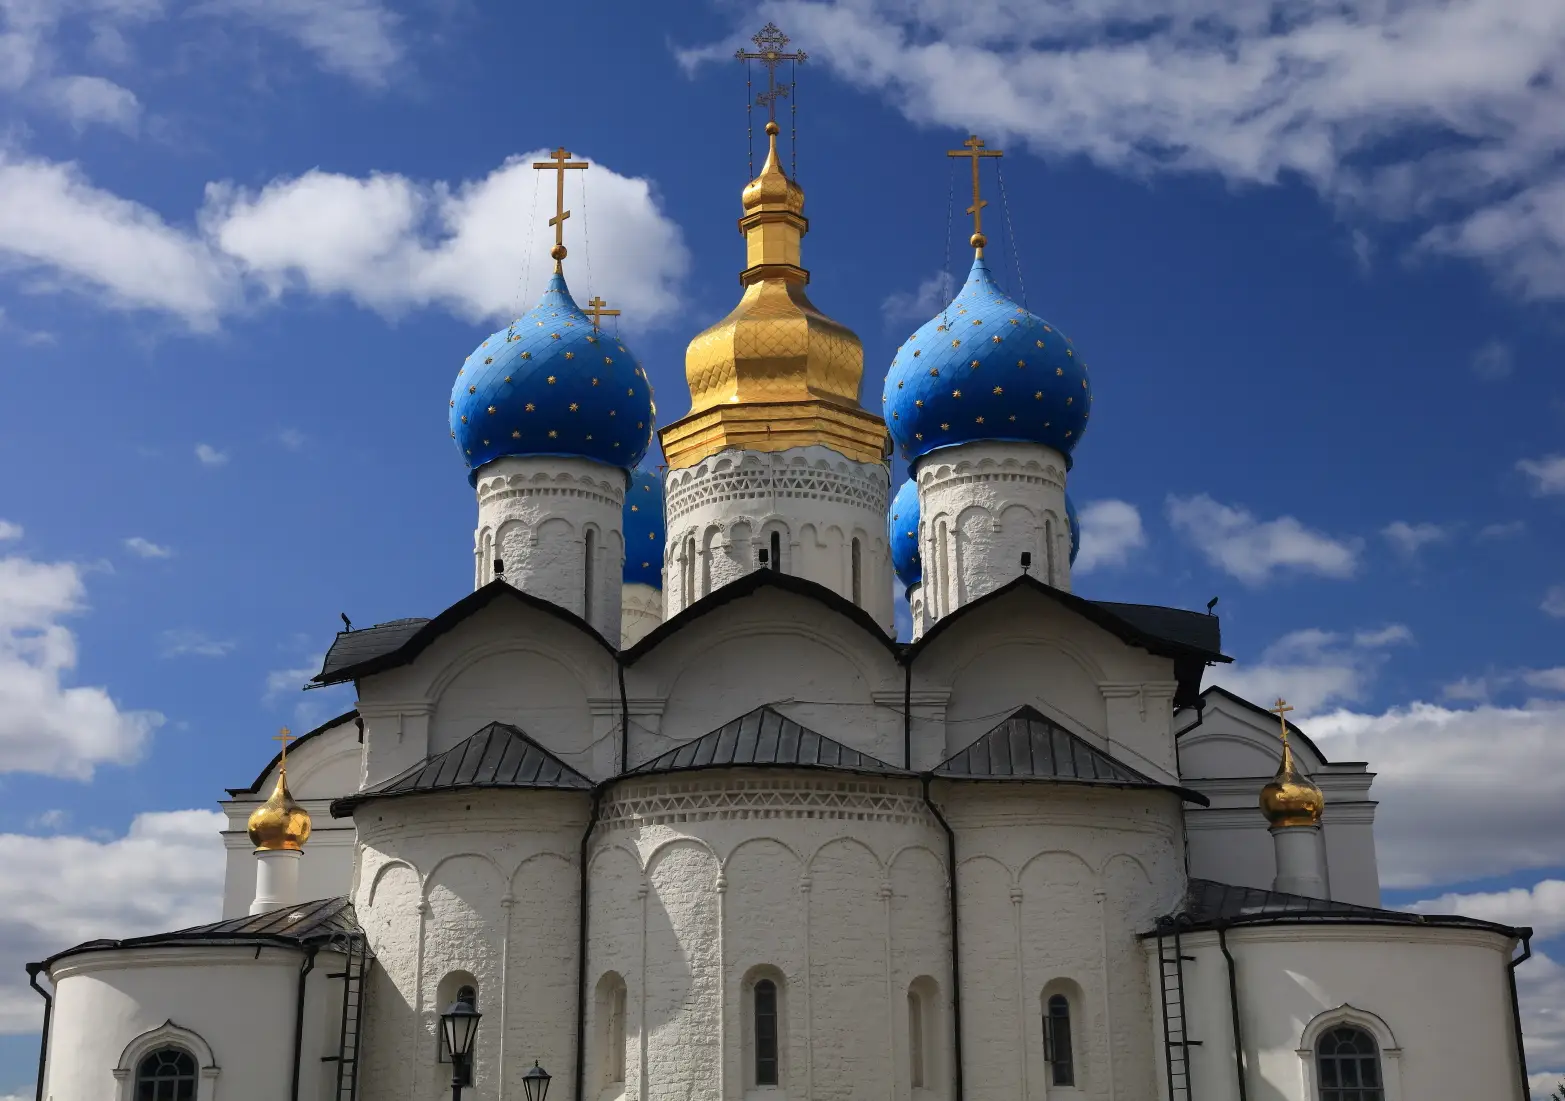 kostel s modro-zlatými věžičkami